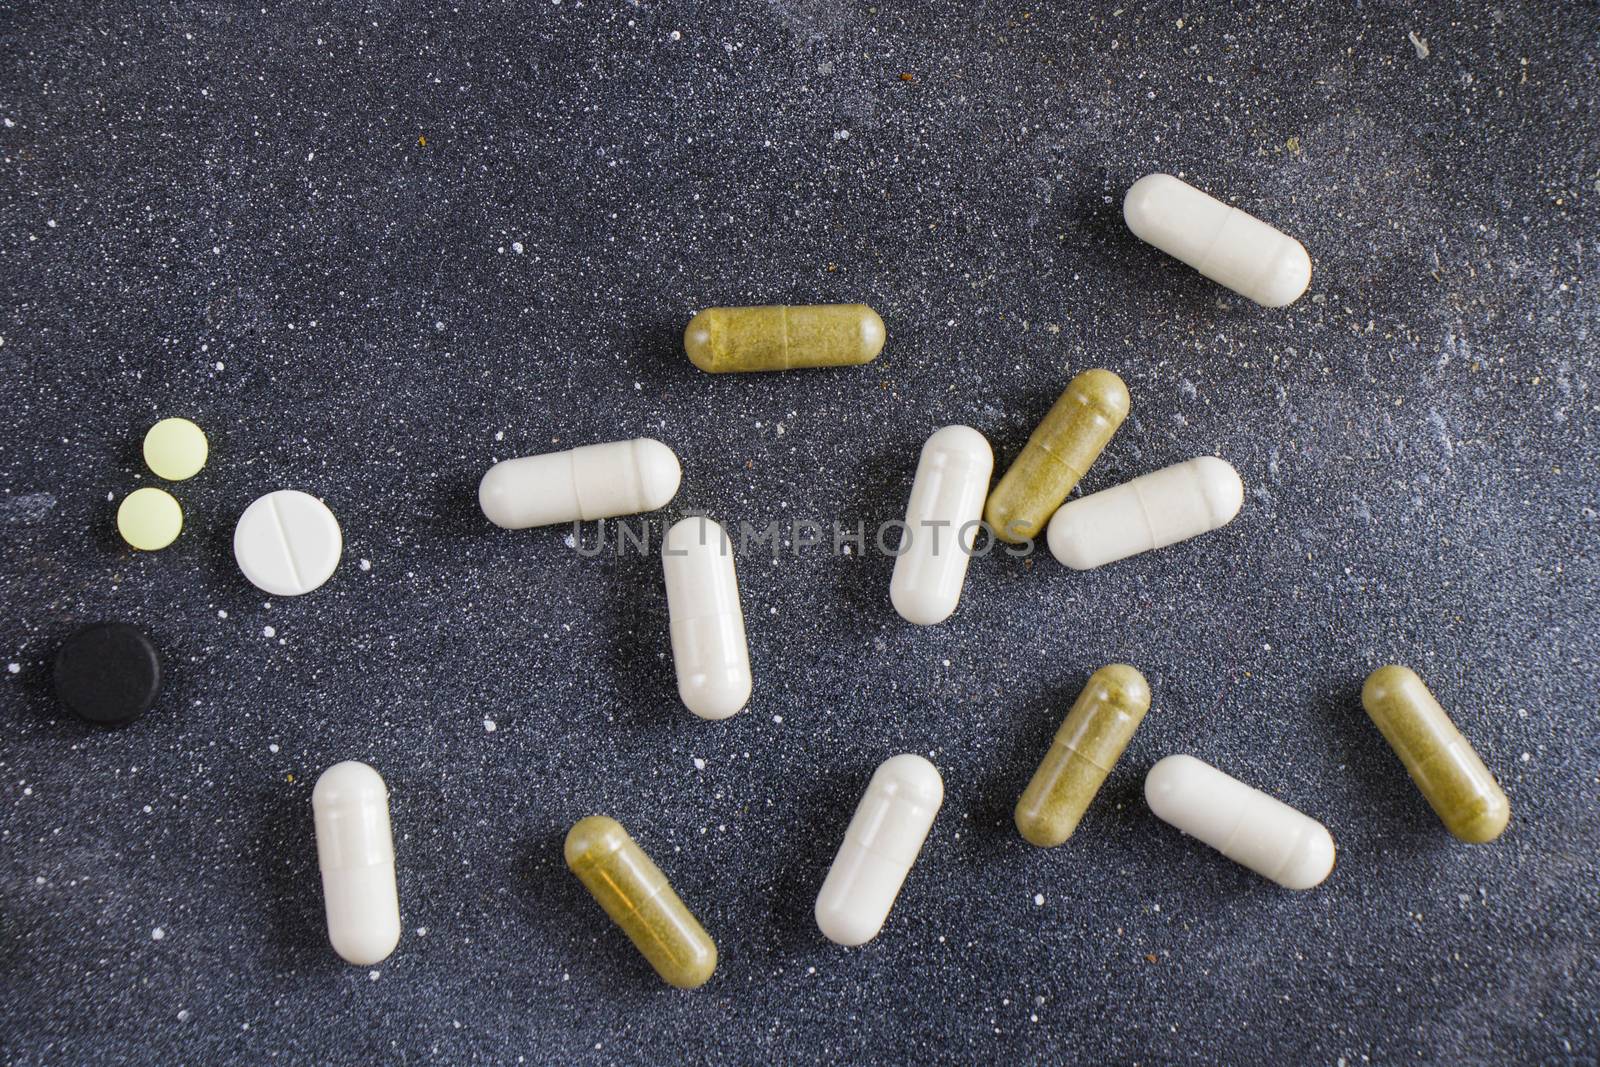 Medicine and drugs, antibiotics and corona virus protection, viruses, ill, and drug capsules by Taidundua